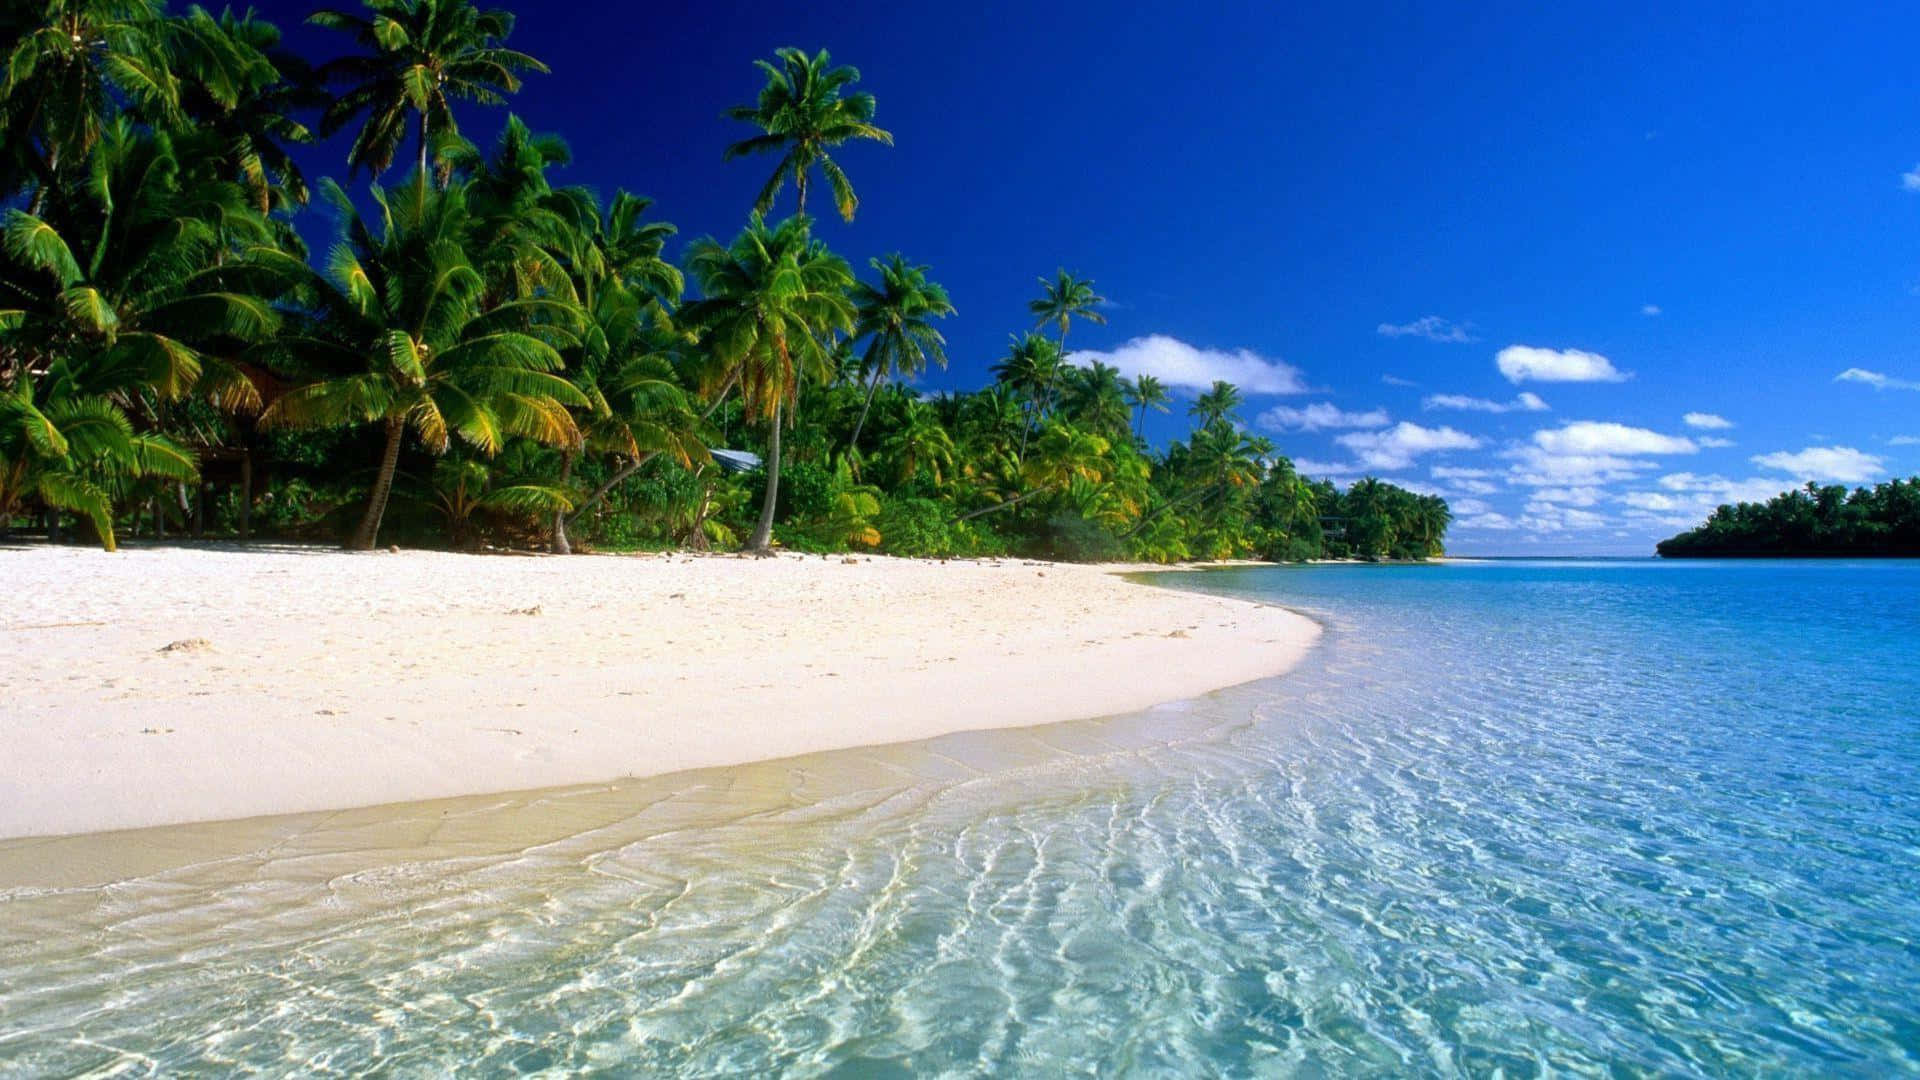 Impresionantevista Panorámica De Un Paraíso Tropical De Playa.